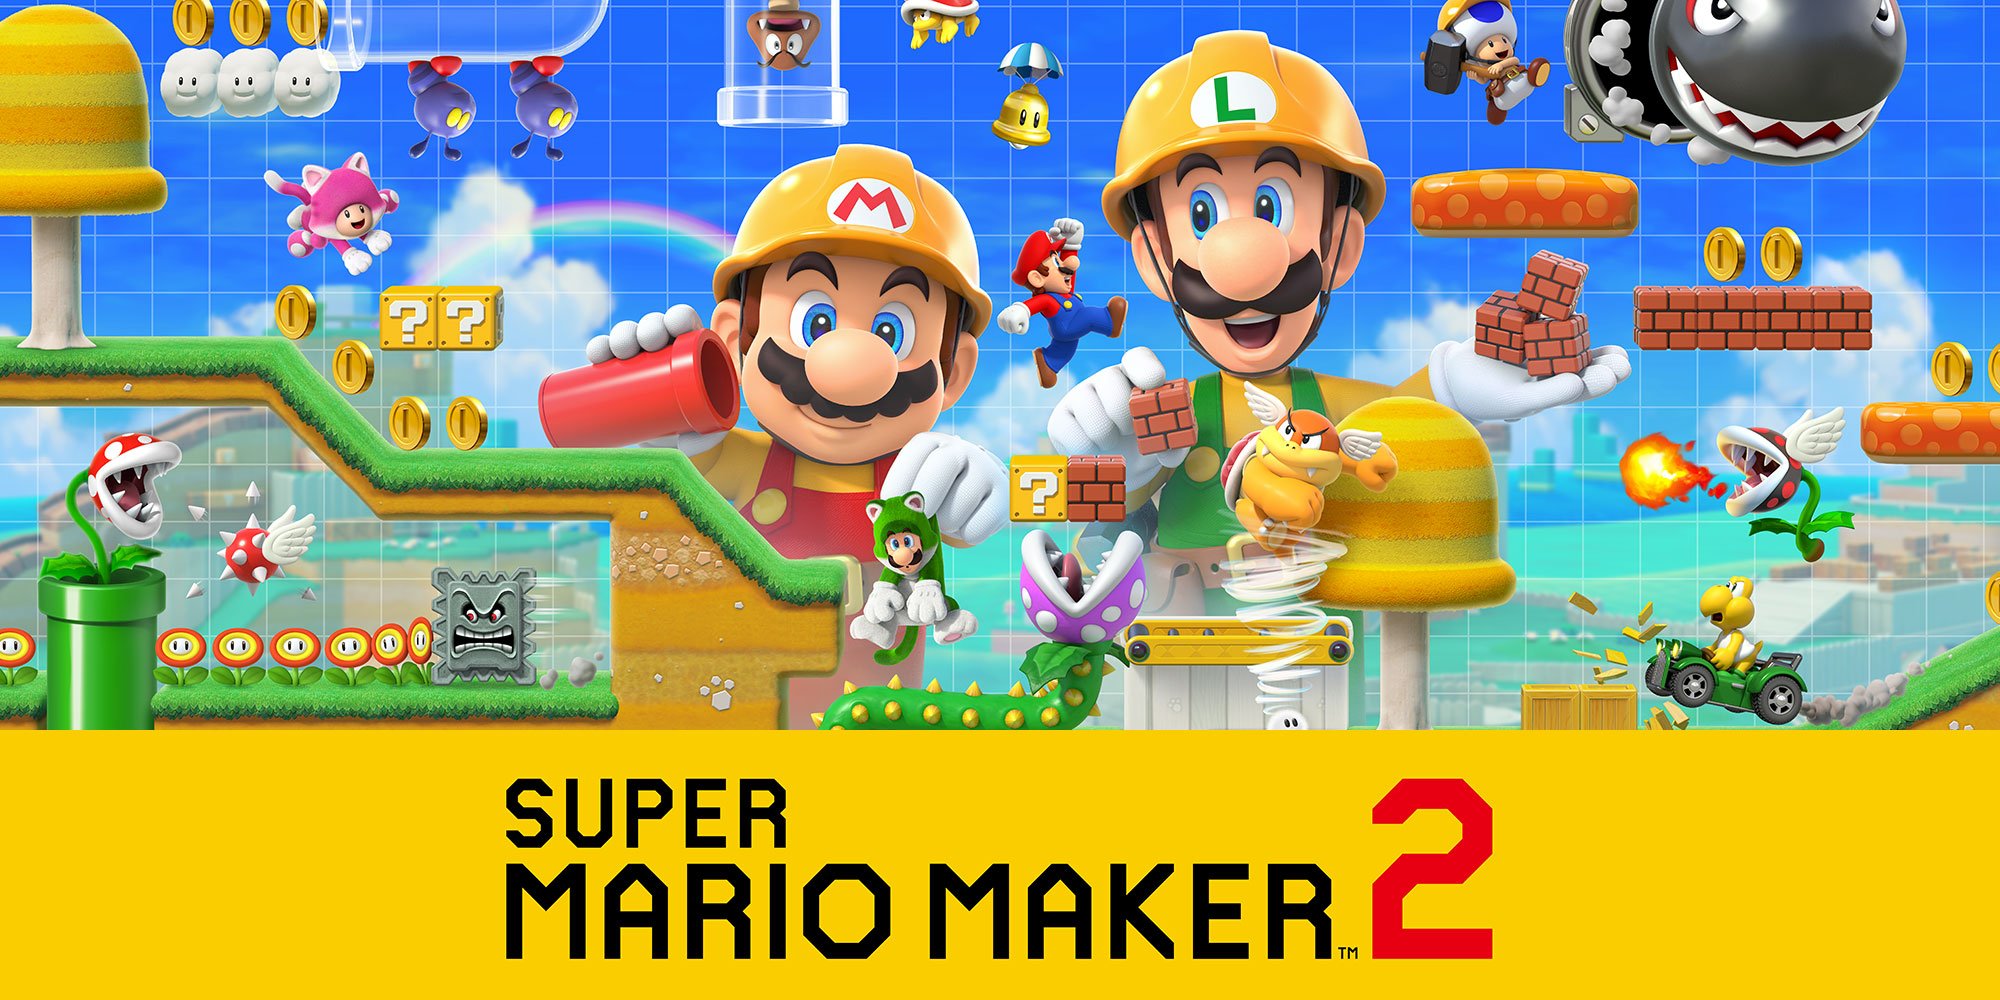 Mario kart 8 deluxe | new super mario maker 2 na bgs 2019 | h2x1 nswitch supermariomaker2 1 | notícias